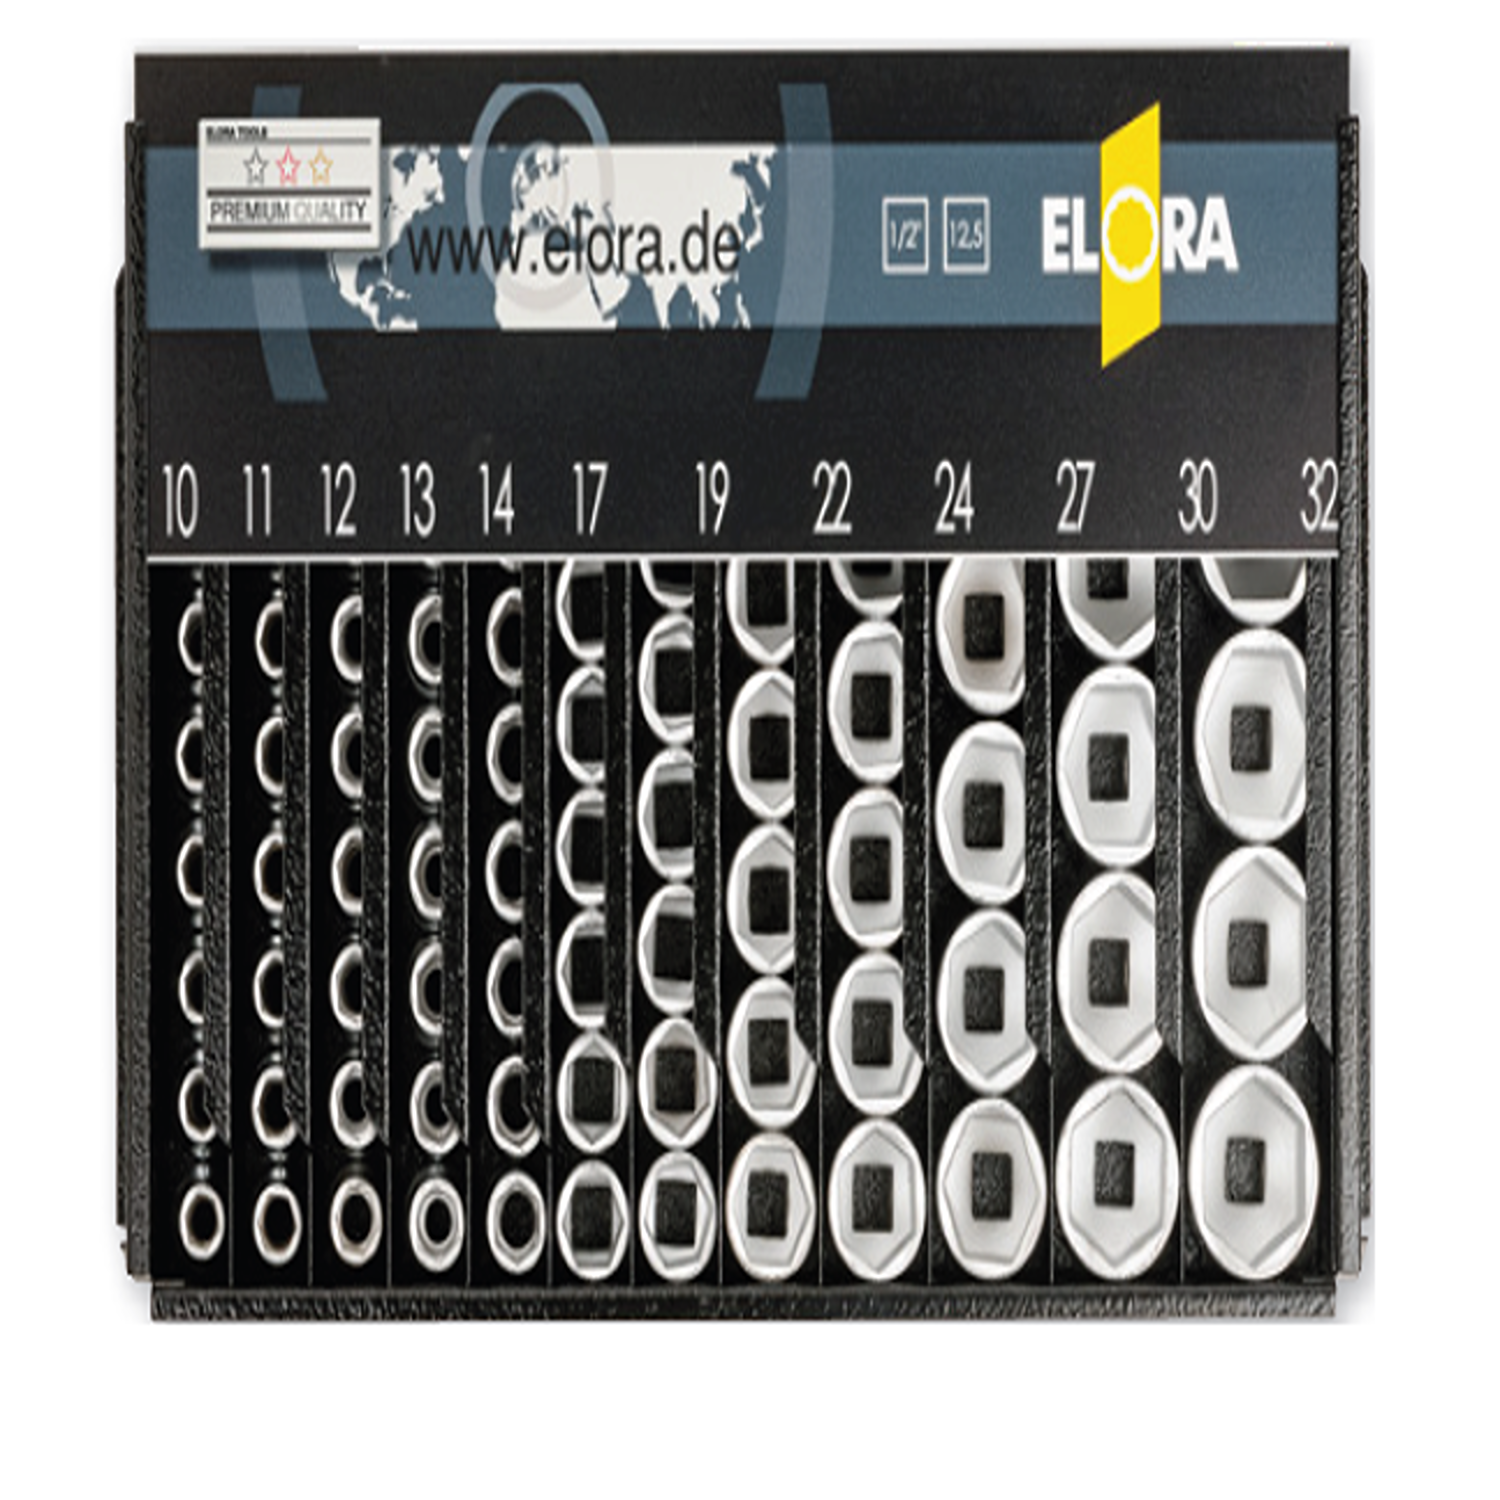 ELORA 770-LSP2L Socket Display Dispenser (ELORA Tools) - Premium Socket Display Dispenser from ELORA - Shop now at Yew Aik.